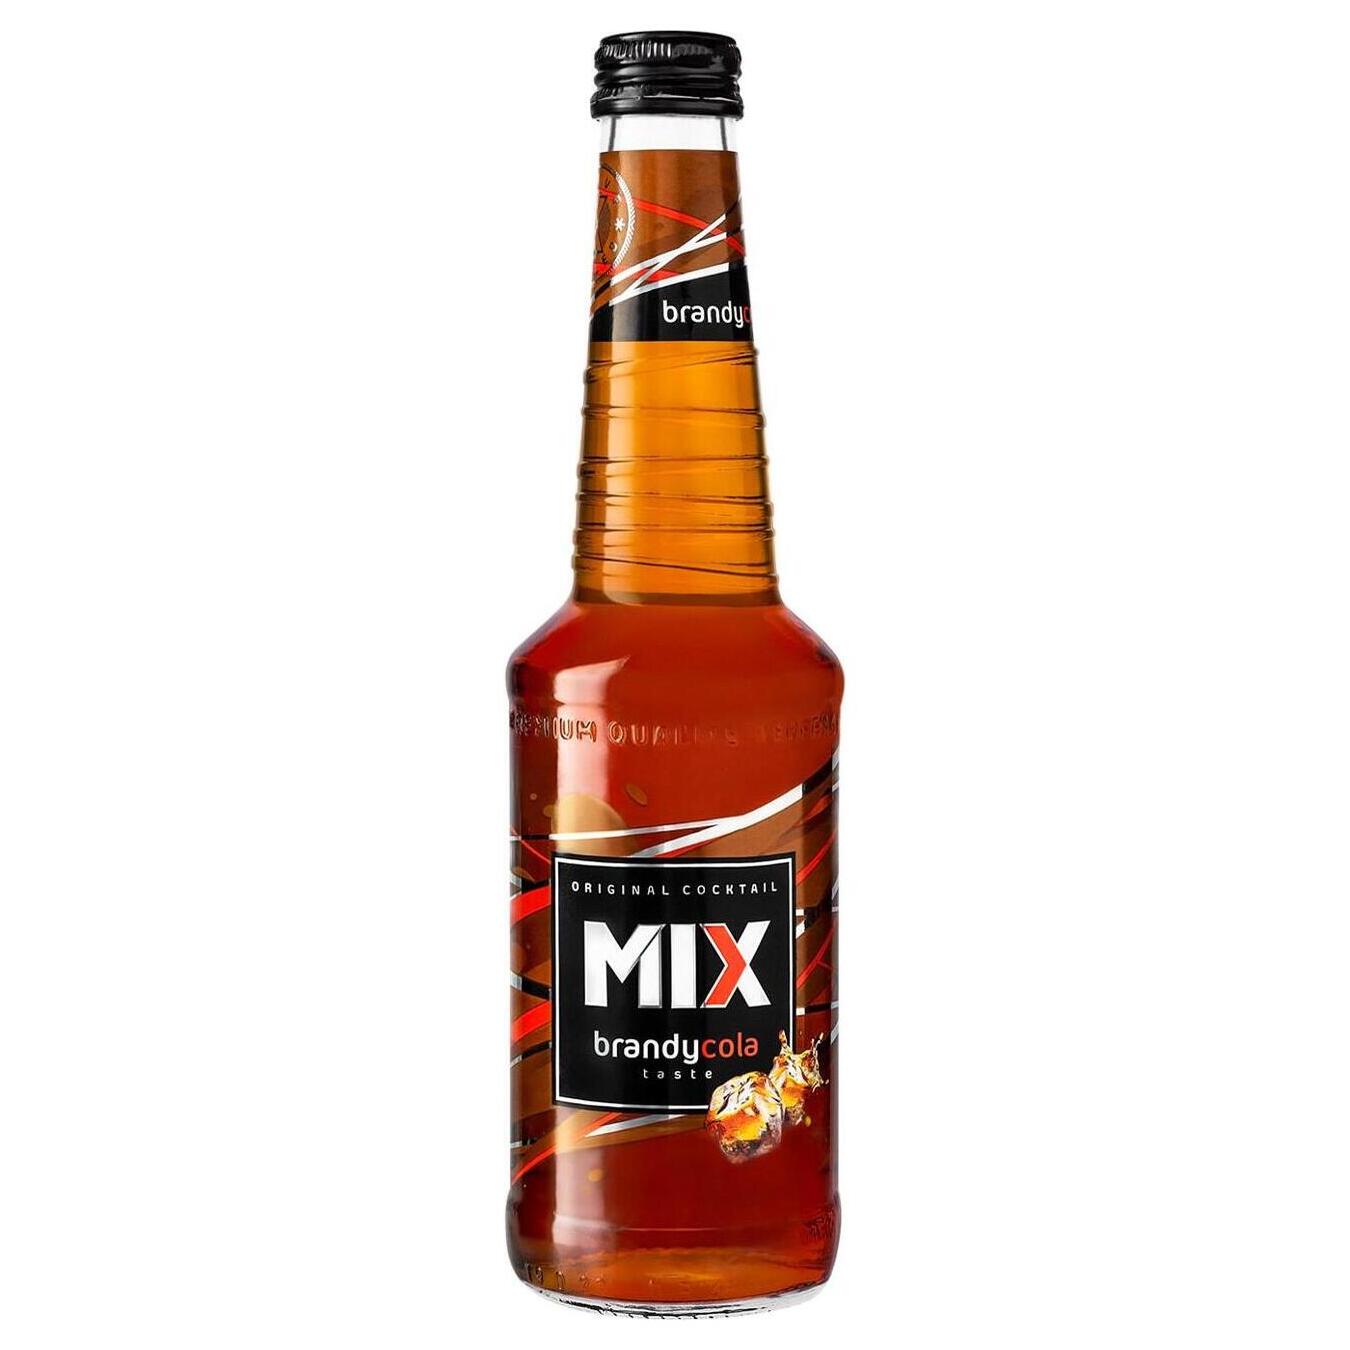 Low-alcohol drink MIX brandy cola 4% 0.33l glass